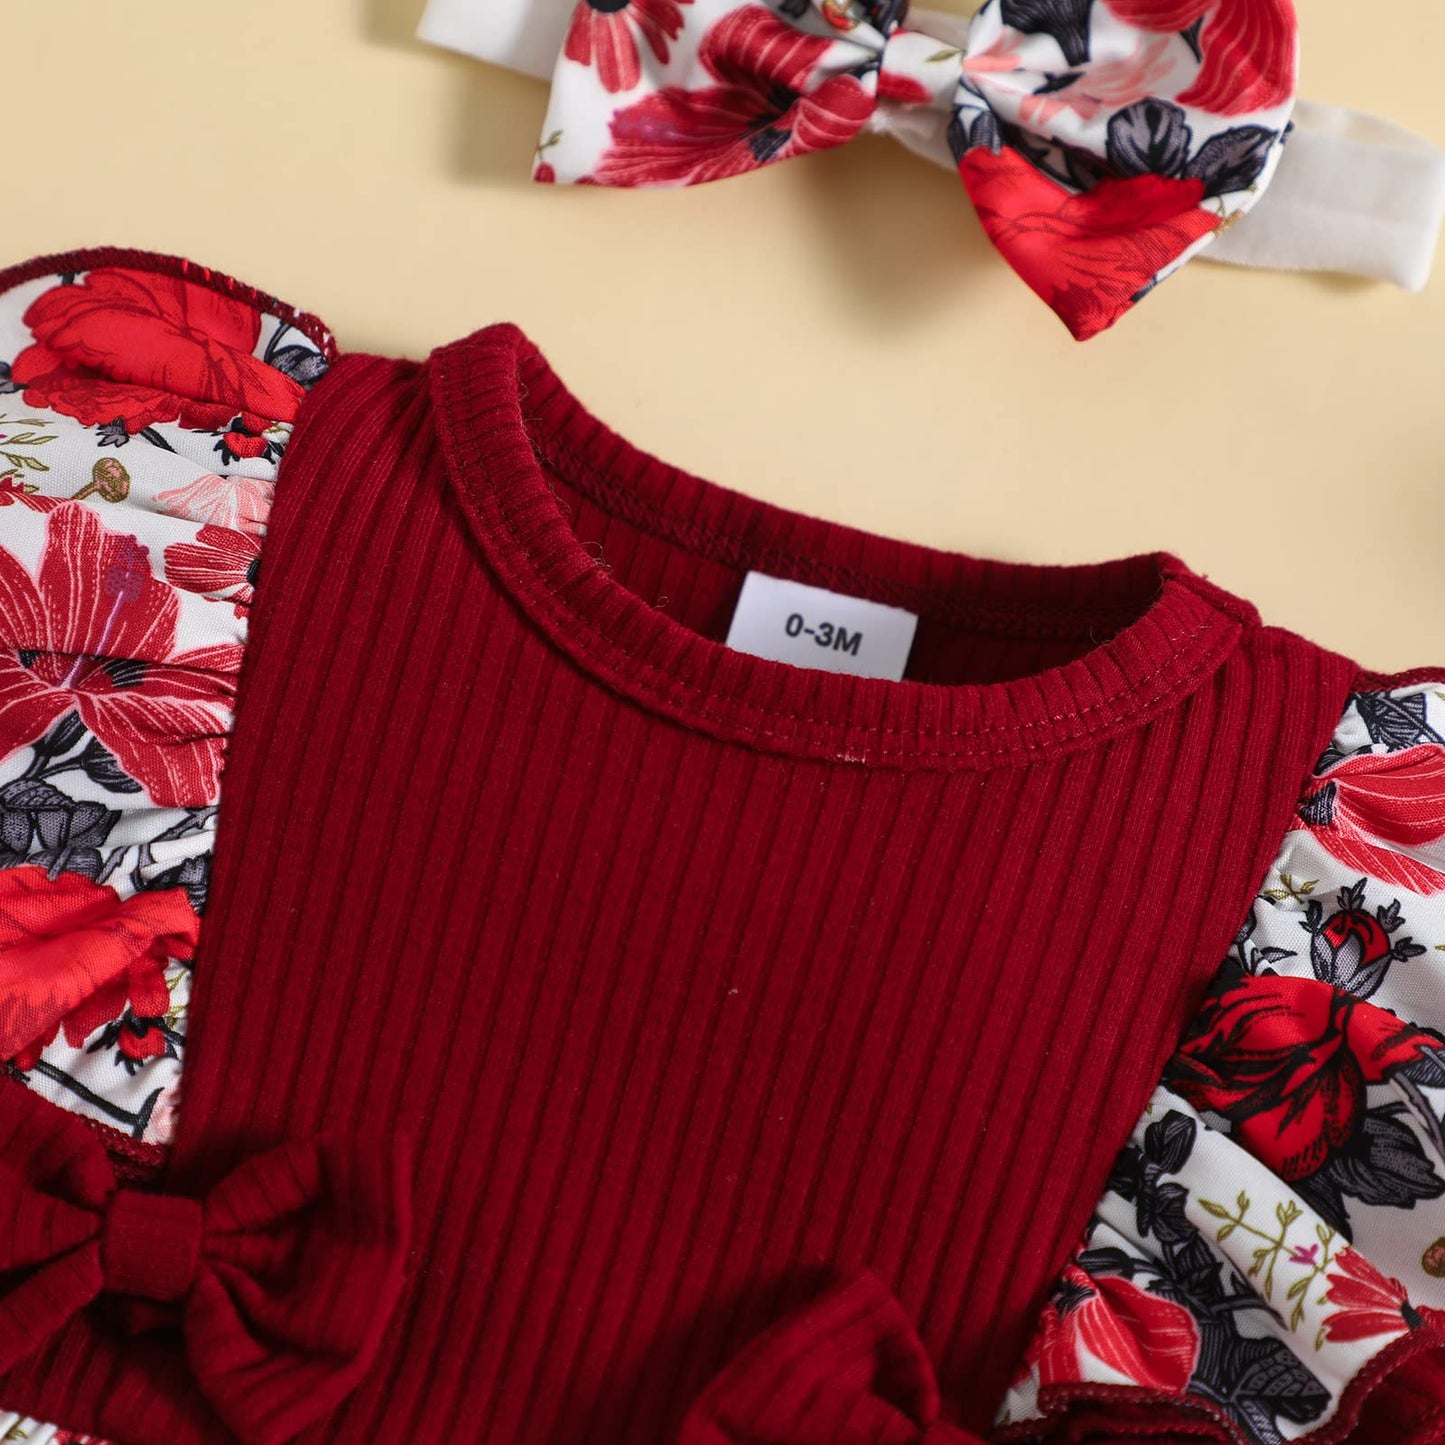 Mecykcsr Newborn Baby Girl Romper Floral Ruffle Ribbed Bodysuit One-Piece Jumpsuits Headband Summer Outfits Set 3-6 Months